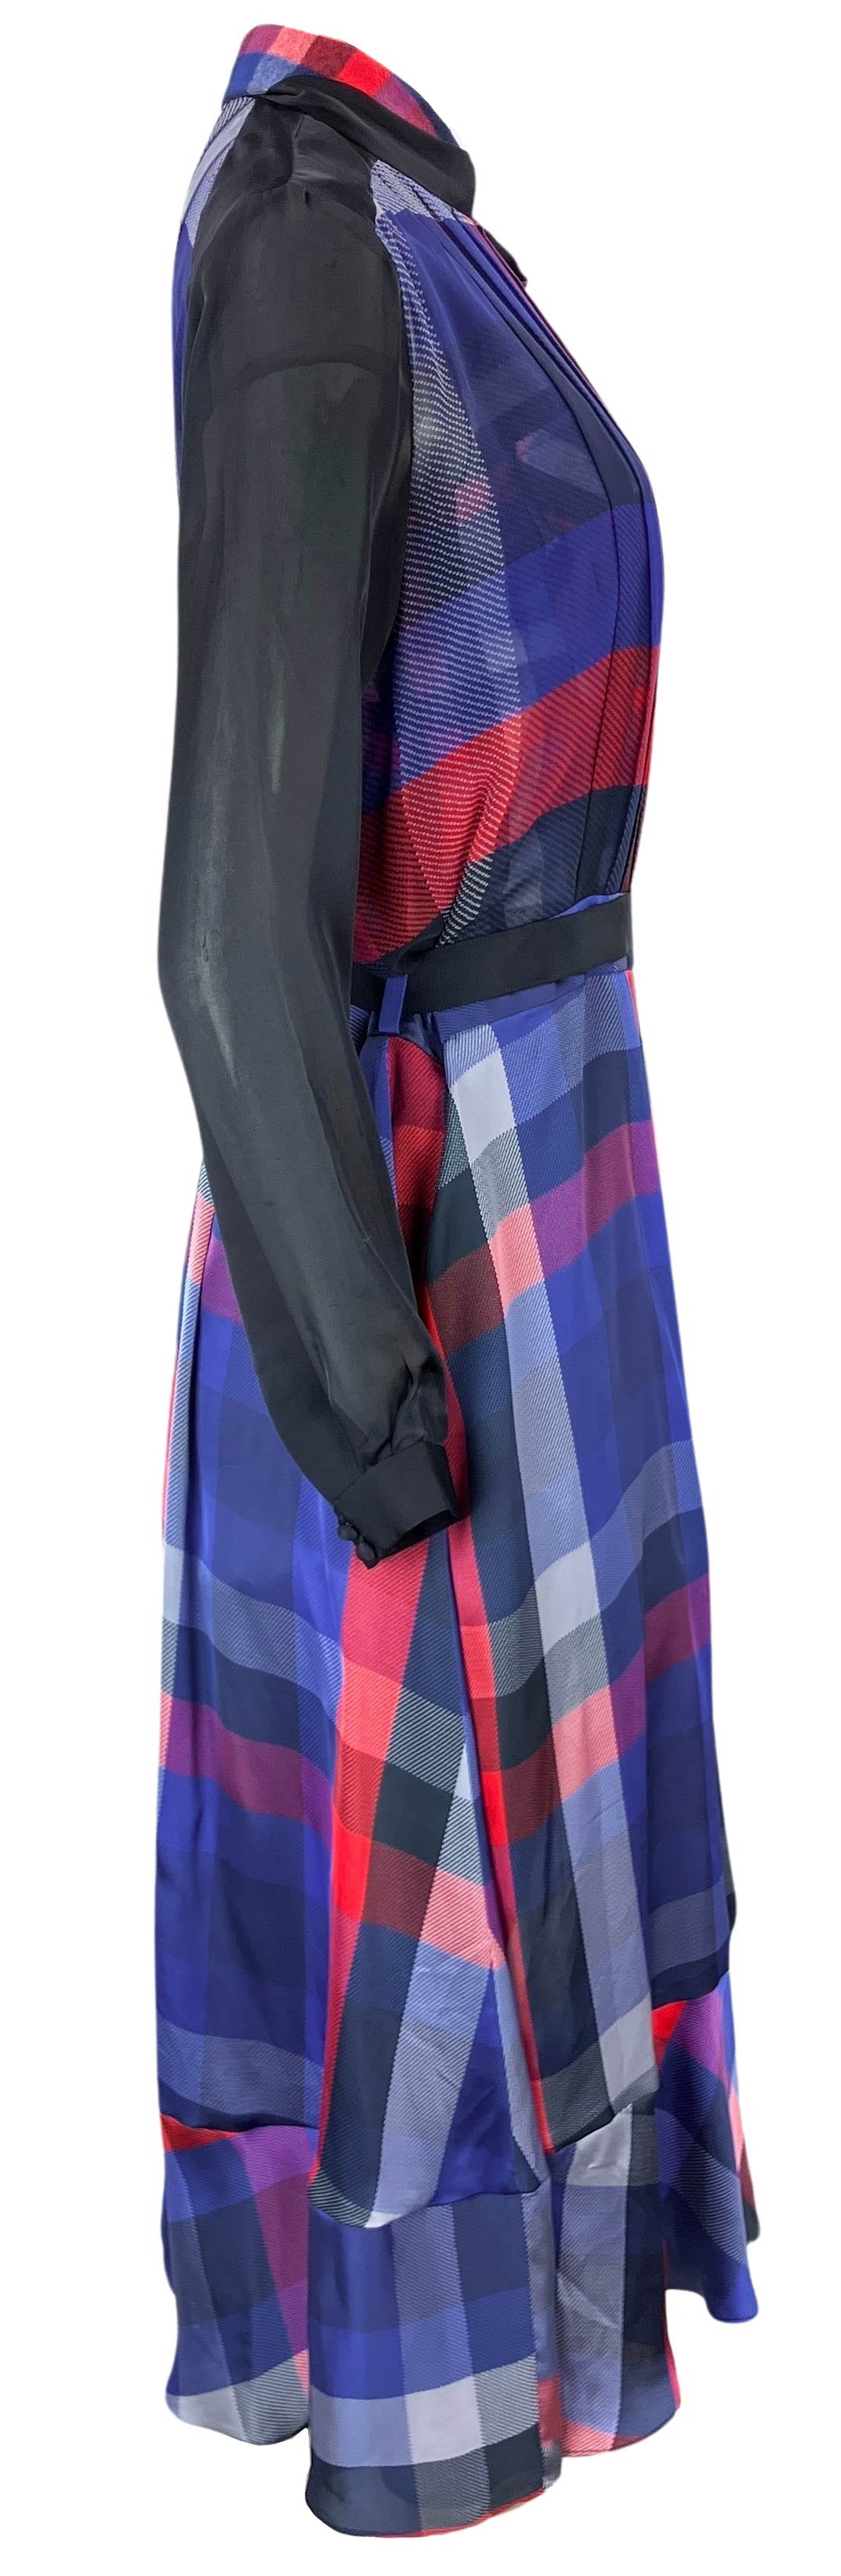 sacai Check-Print Shirt Midi-Dress in Multiple Colors - Discounts on sacai at UAL